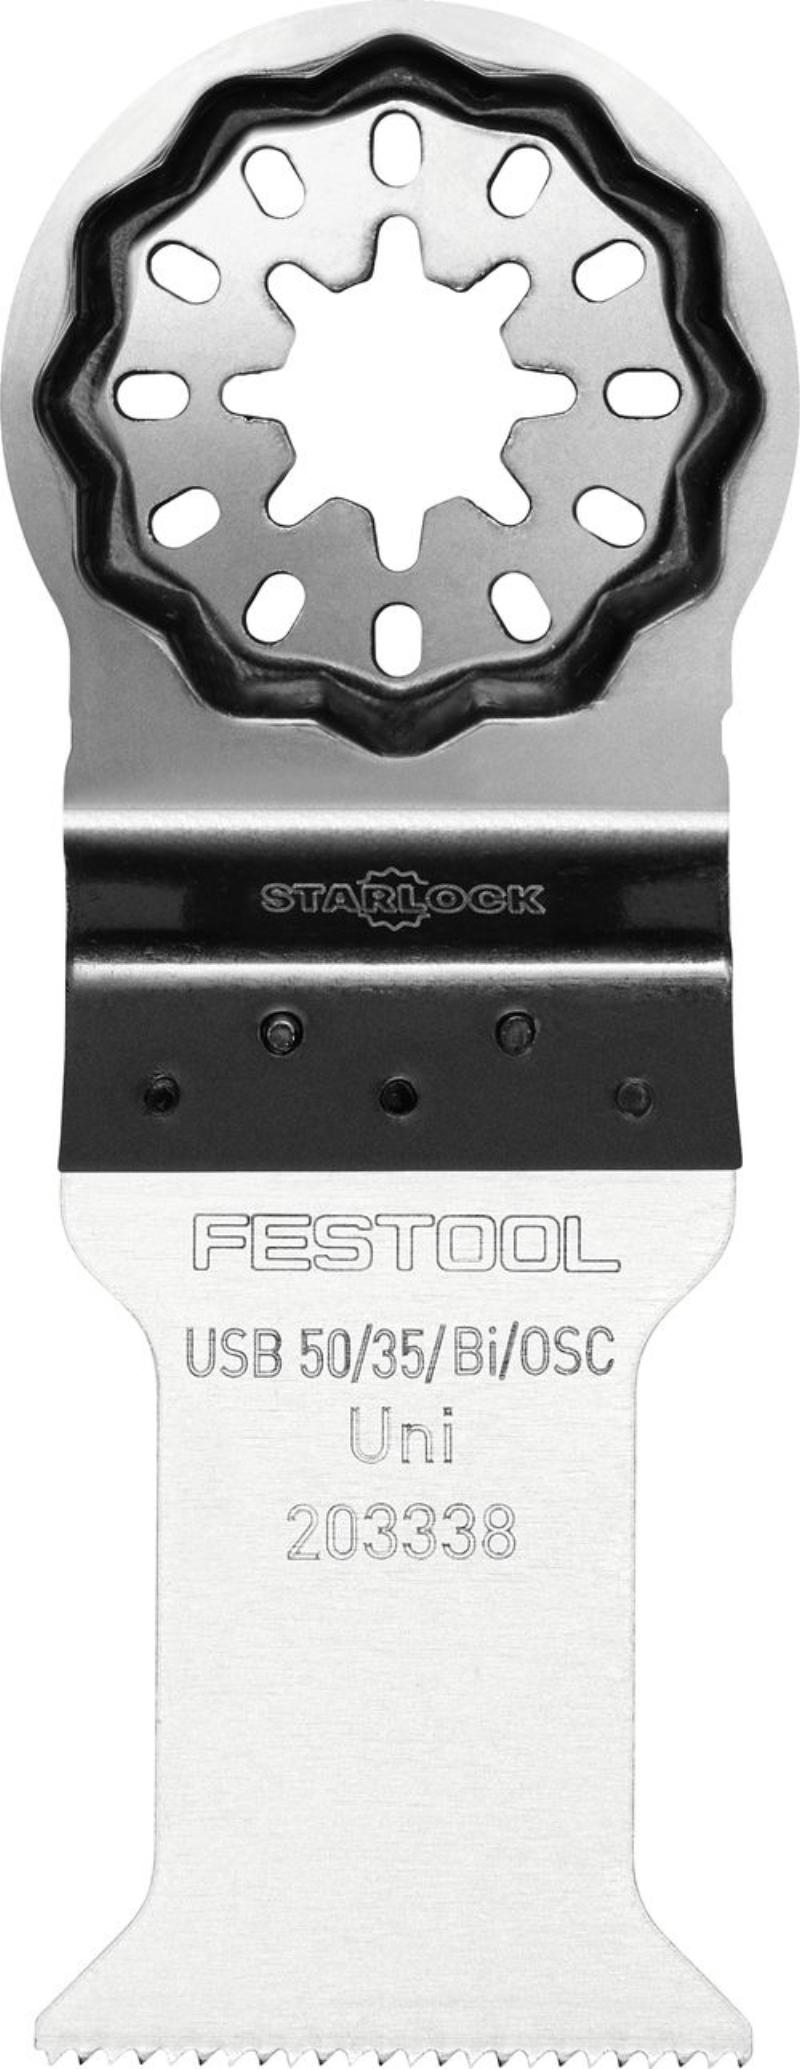 Festool Universal saw blade USB 50/35/Bi/OSC, 1 pc